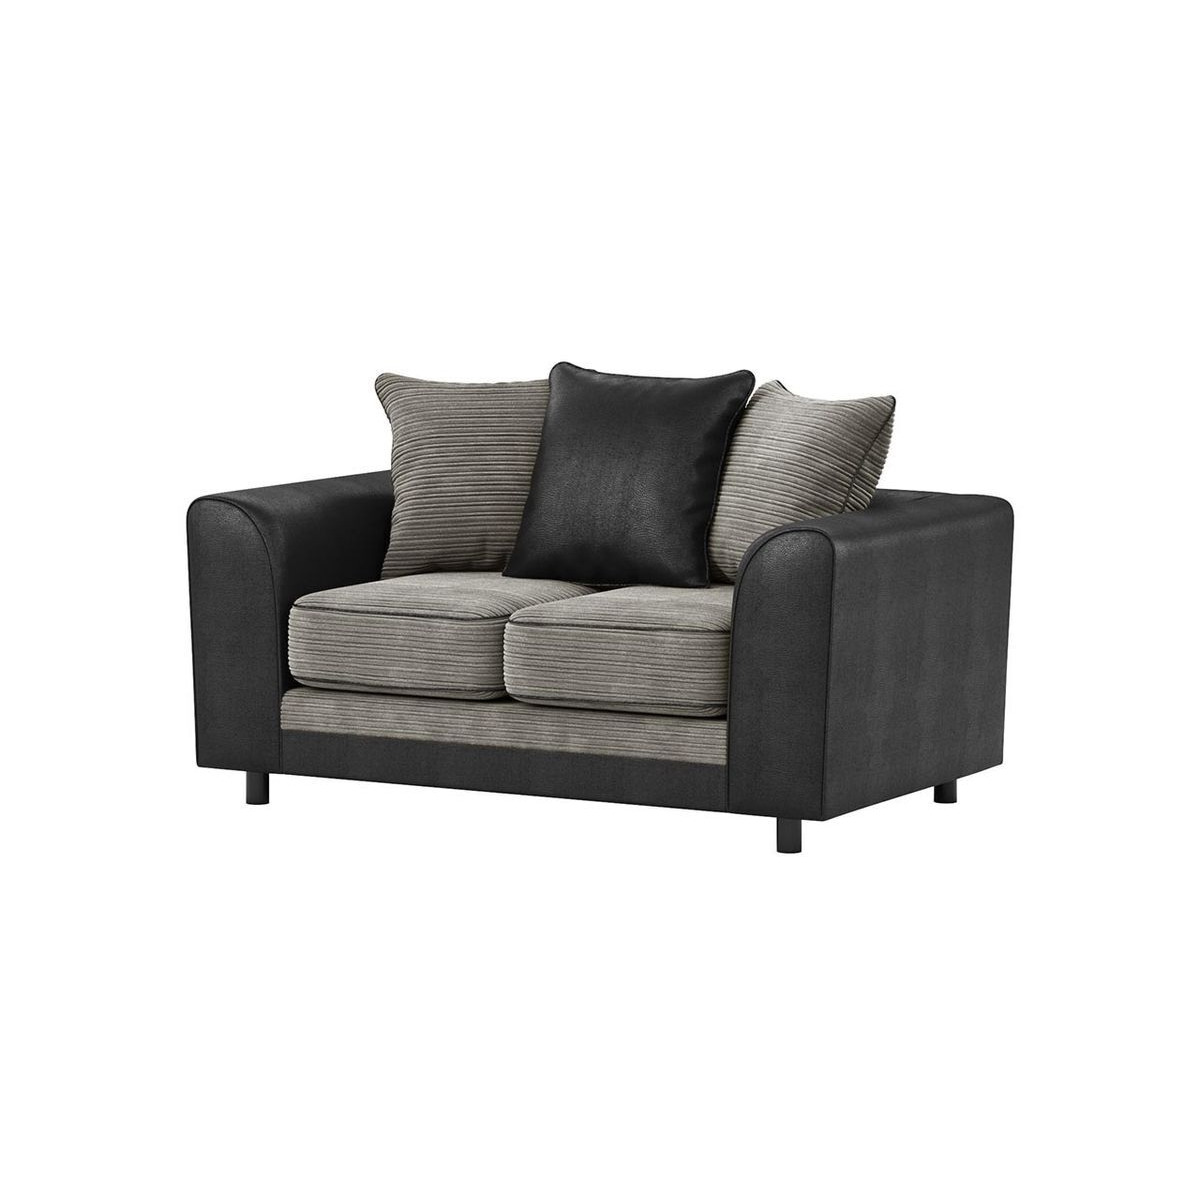 Dillon 2 Seater Sofa Bed, grey/black - image 1